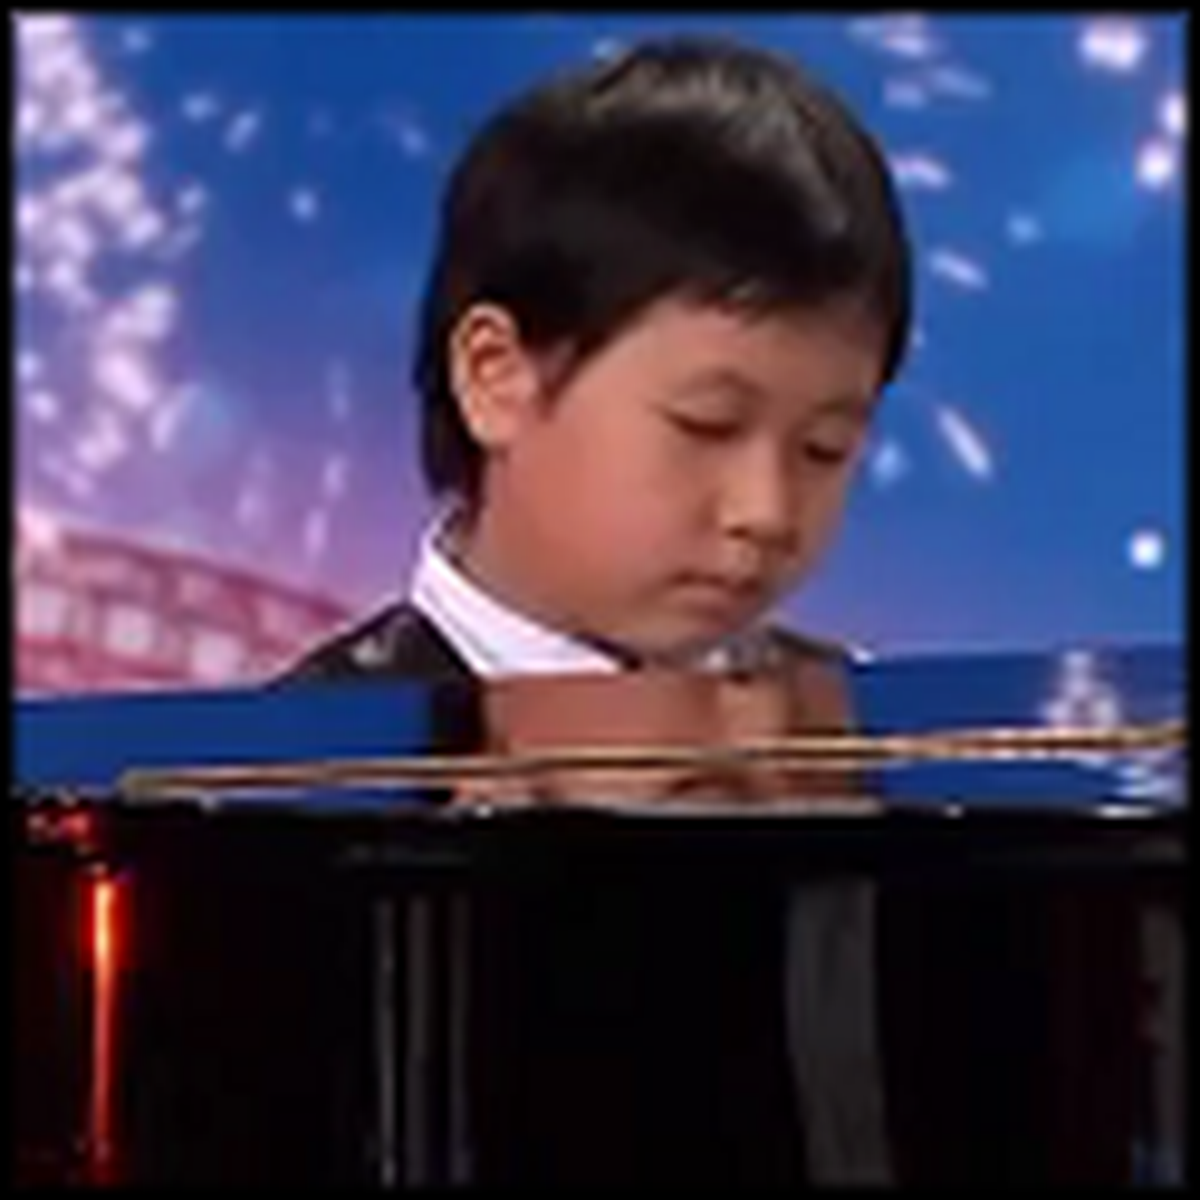 elias 7 year old piano prodigy